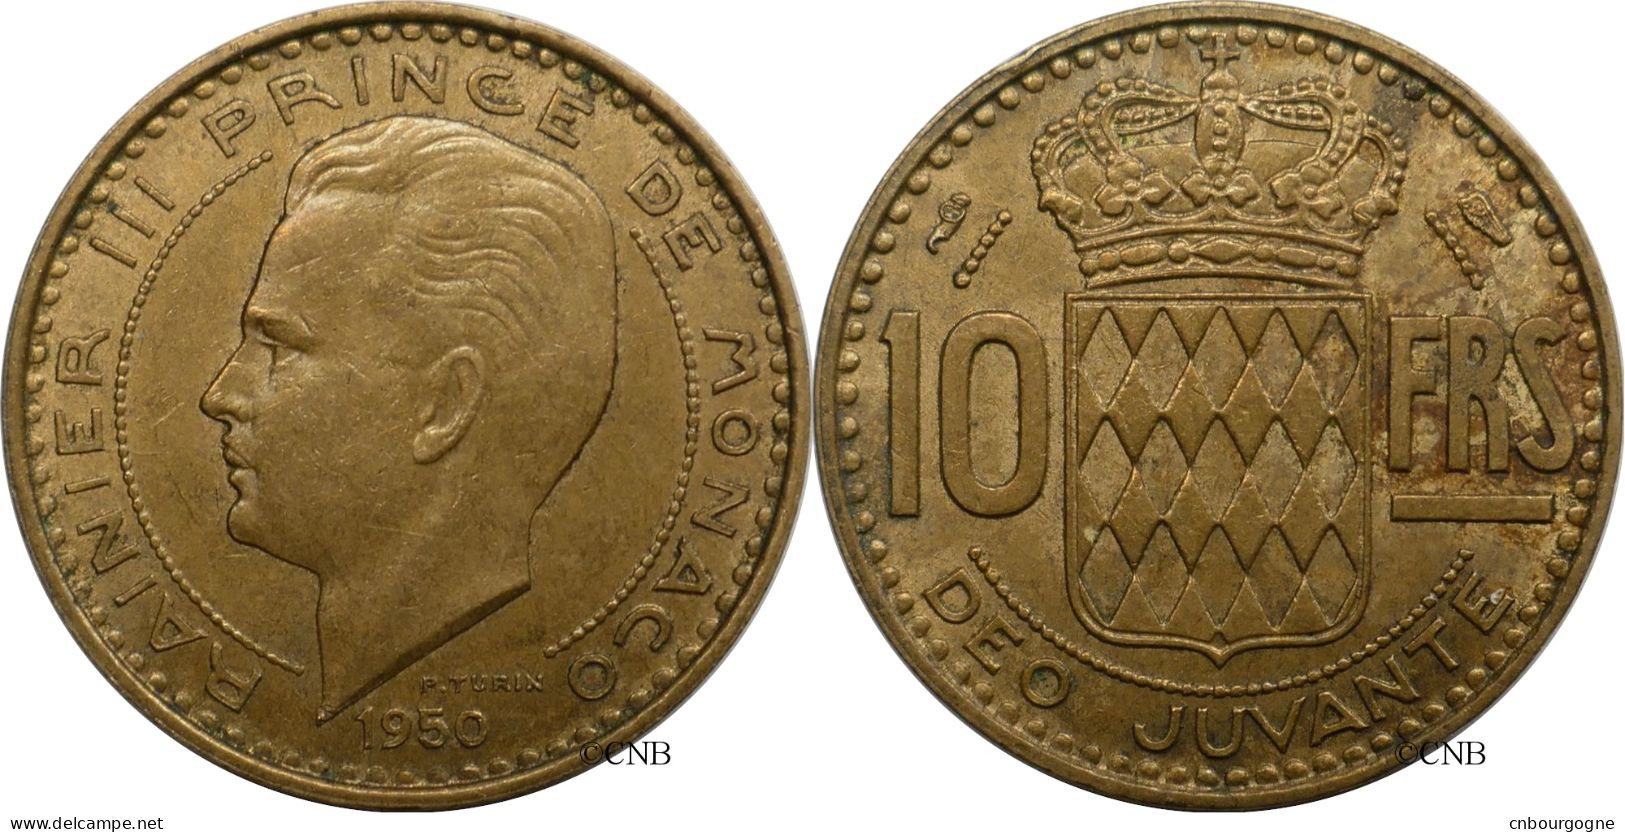 Monaco - Principauté - Rainier III - 10 Francs 1950 - TTB+/AU50 - Mon6572 - 1949-1956 Francos Antiguos